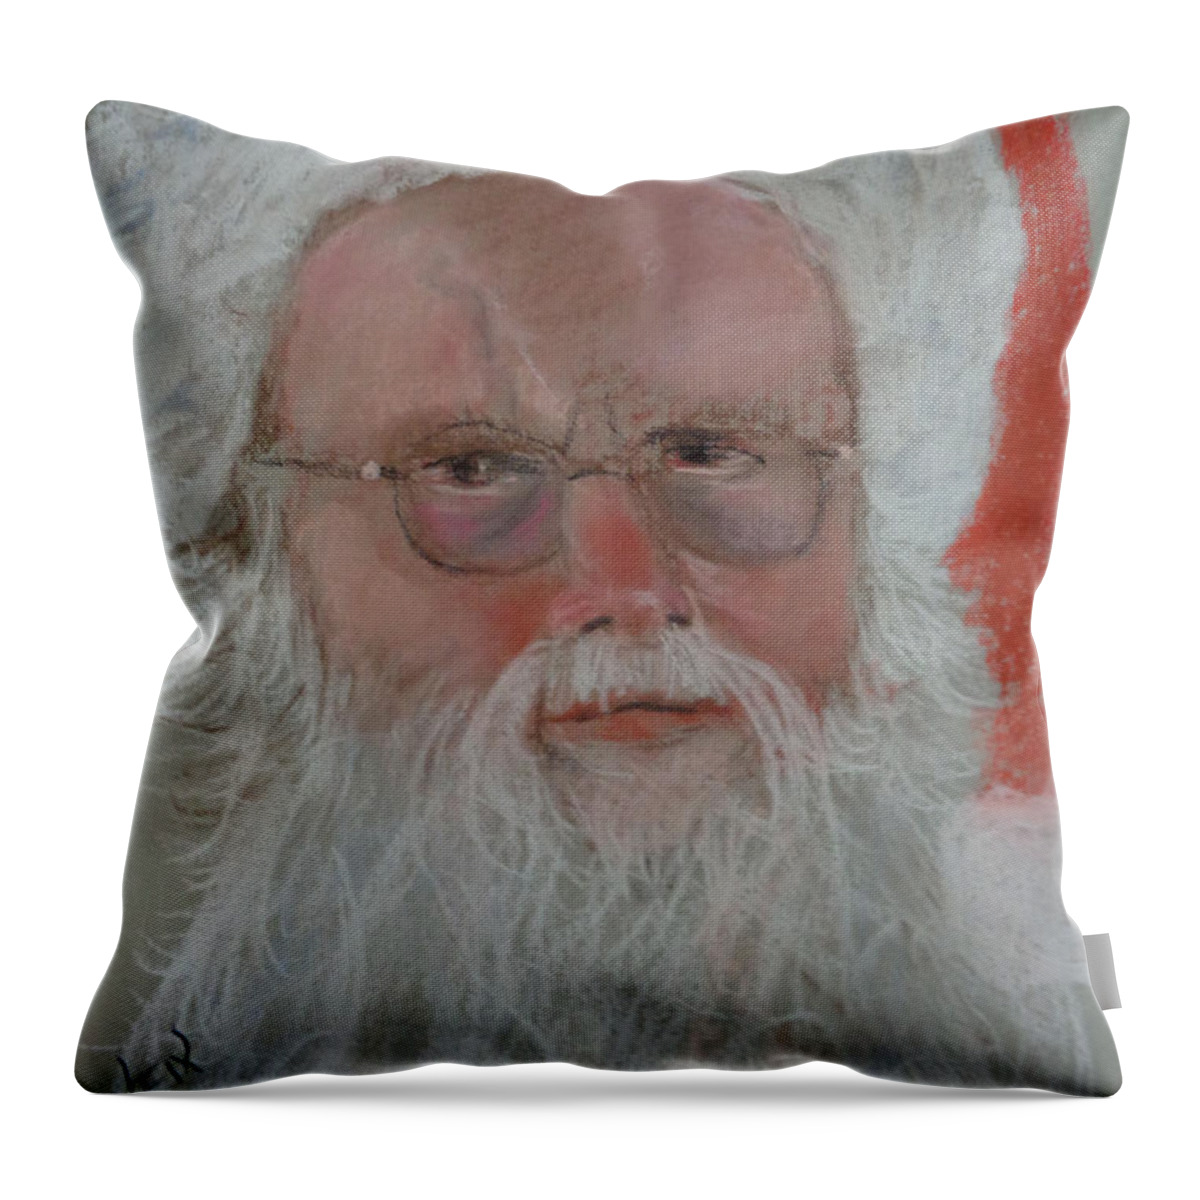 Christmas Throw Pillow featuring the pastel Santa by Arlen Avernian - Thorensen